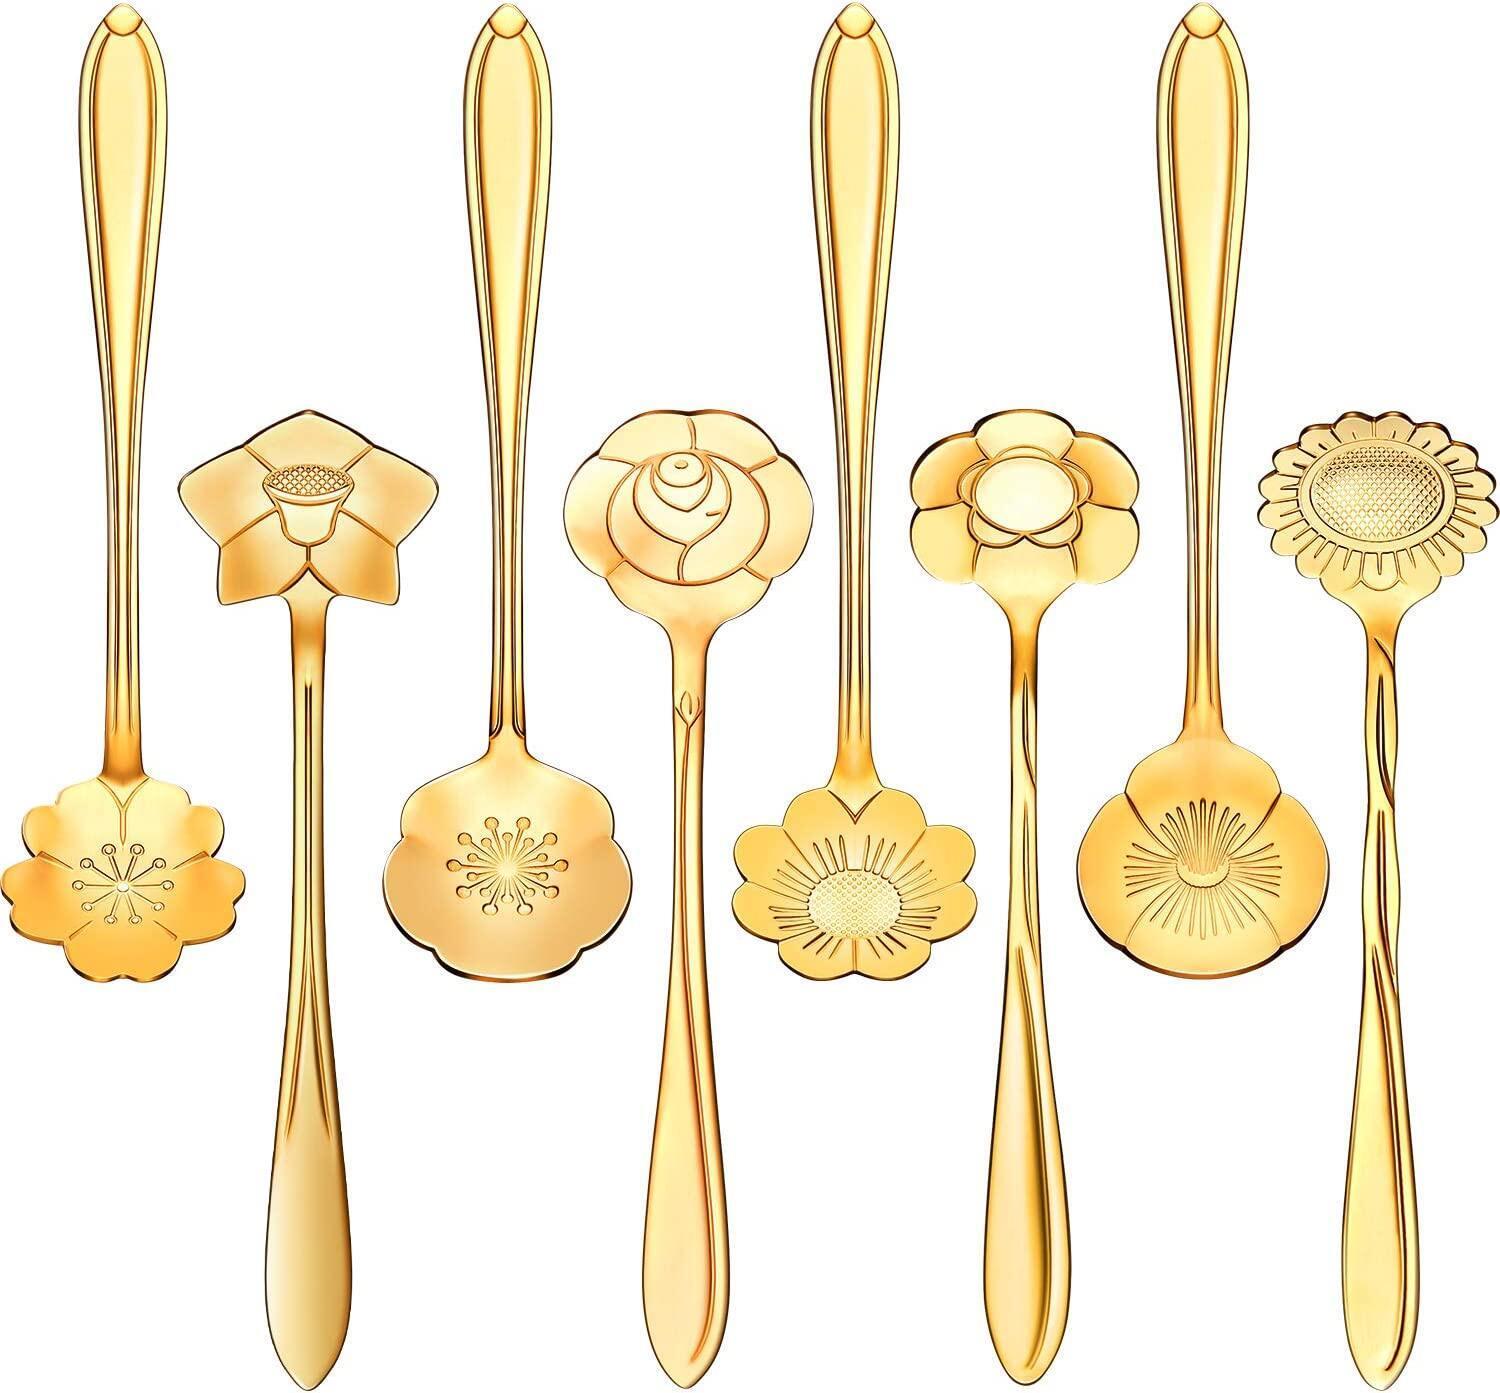 8 Pieces Flower Spoon Coffee Teaspoon Set Stainless Steel Tableware Creative Sugar Spoon Tea Spoon Stir Bar Spoon Stirring Spoon, 8 Different Patterns (colorful)